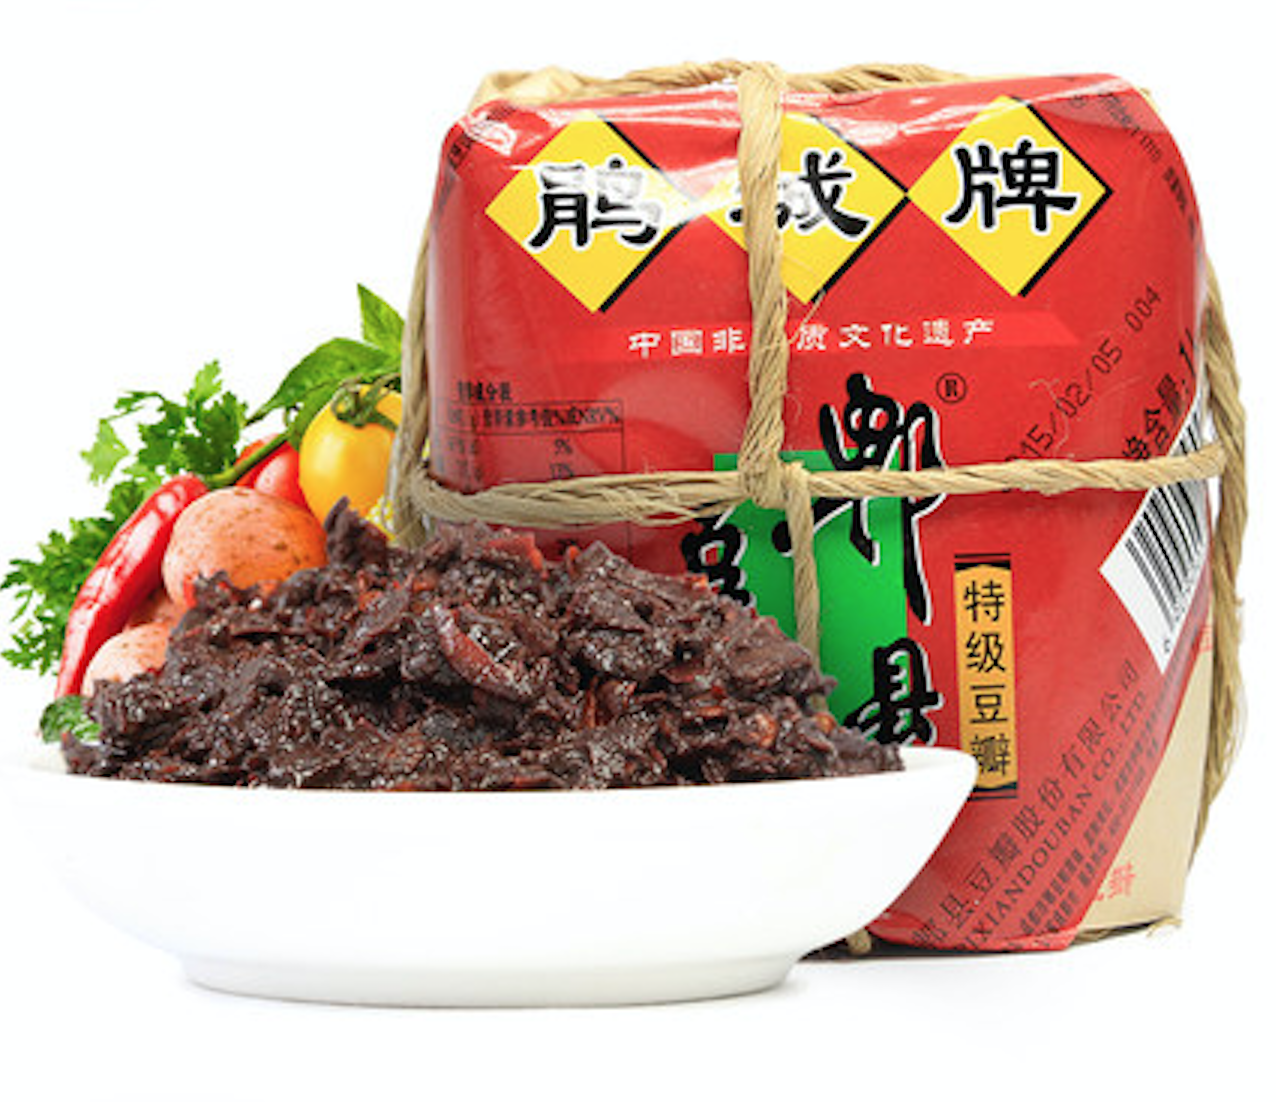 Juan Cheng All Natural Broad Bean Chili Paste ( Pixian Dou Ban Jiang) - 5oz 鹃城特级豆瓣1公斤纸包